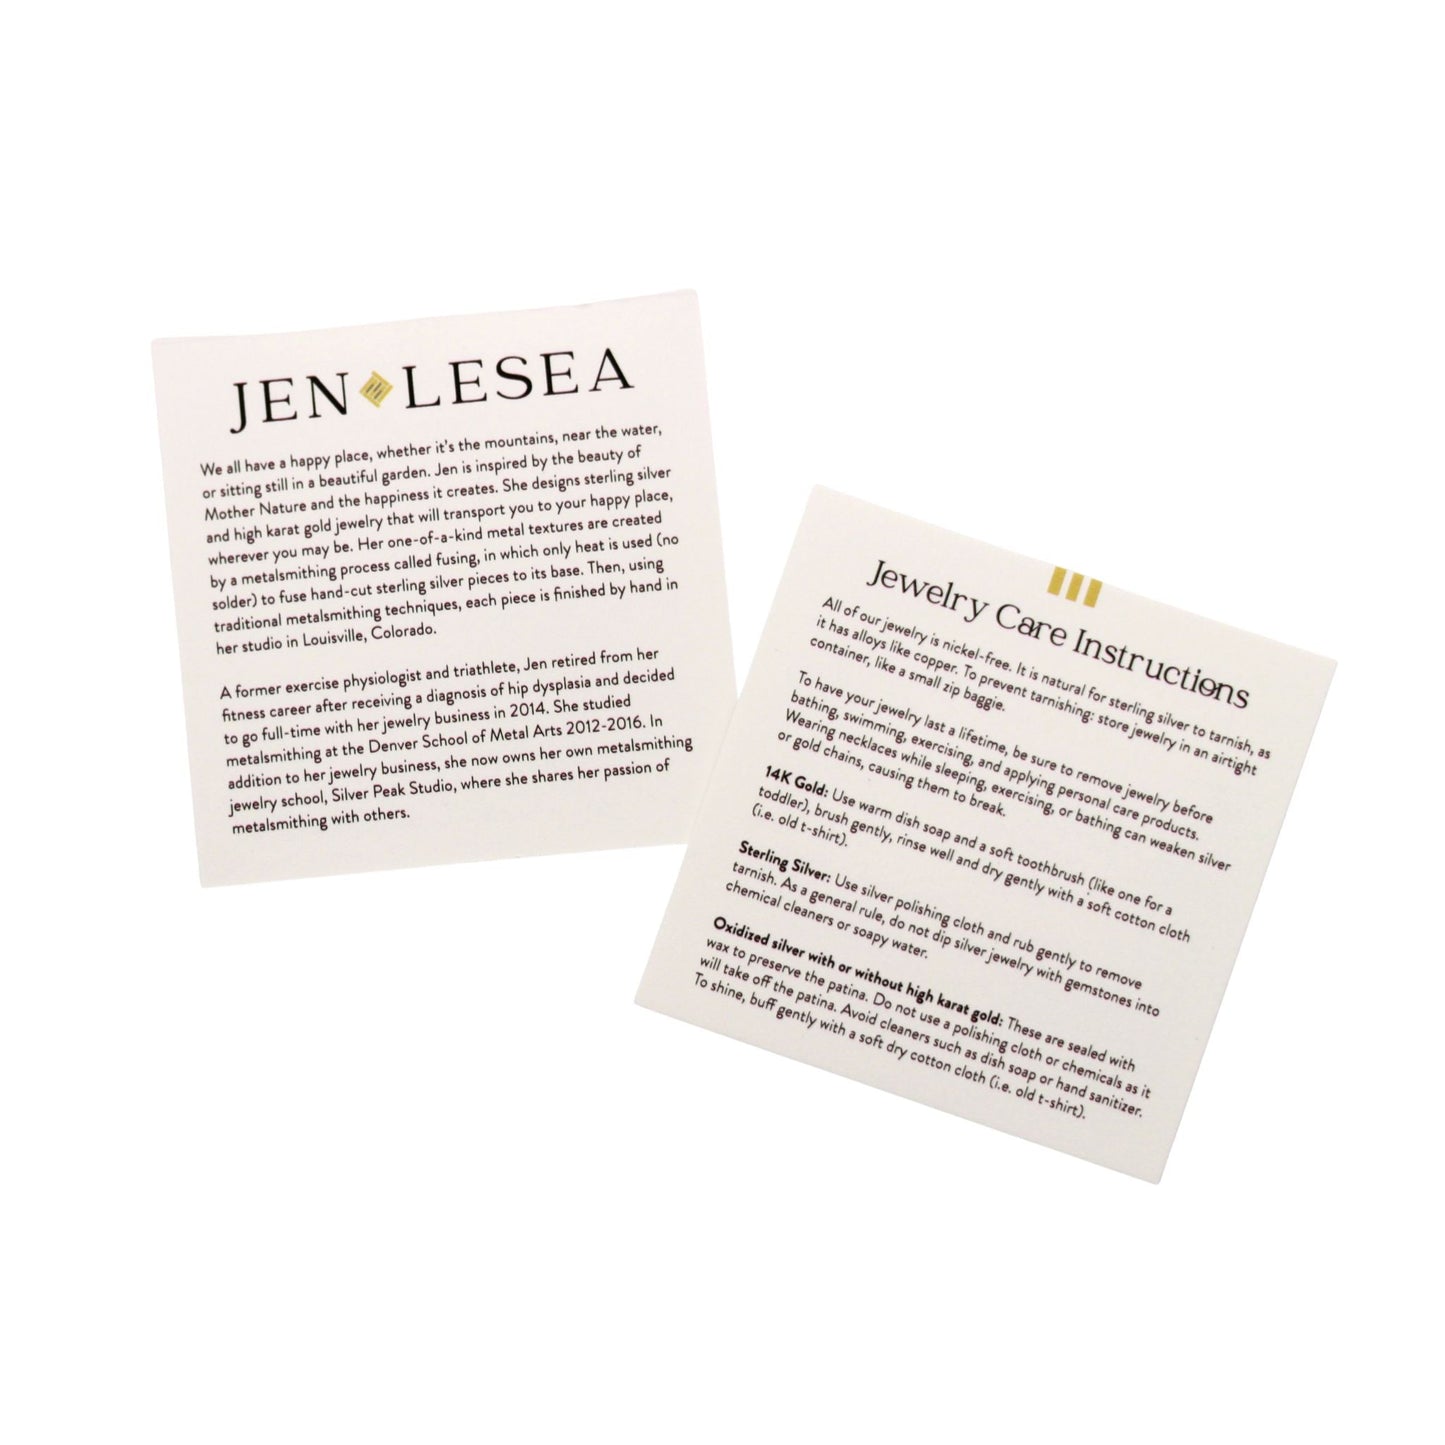 Jen Lesea artist bio and care card